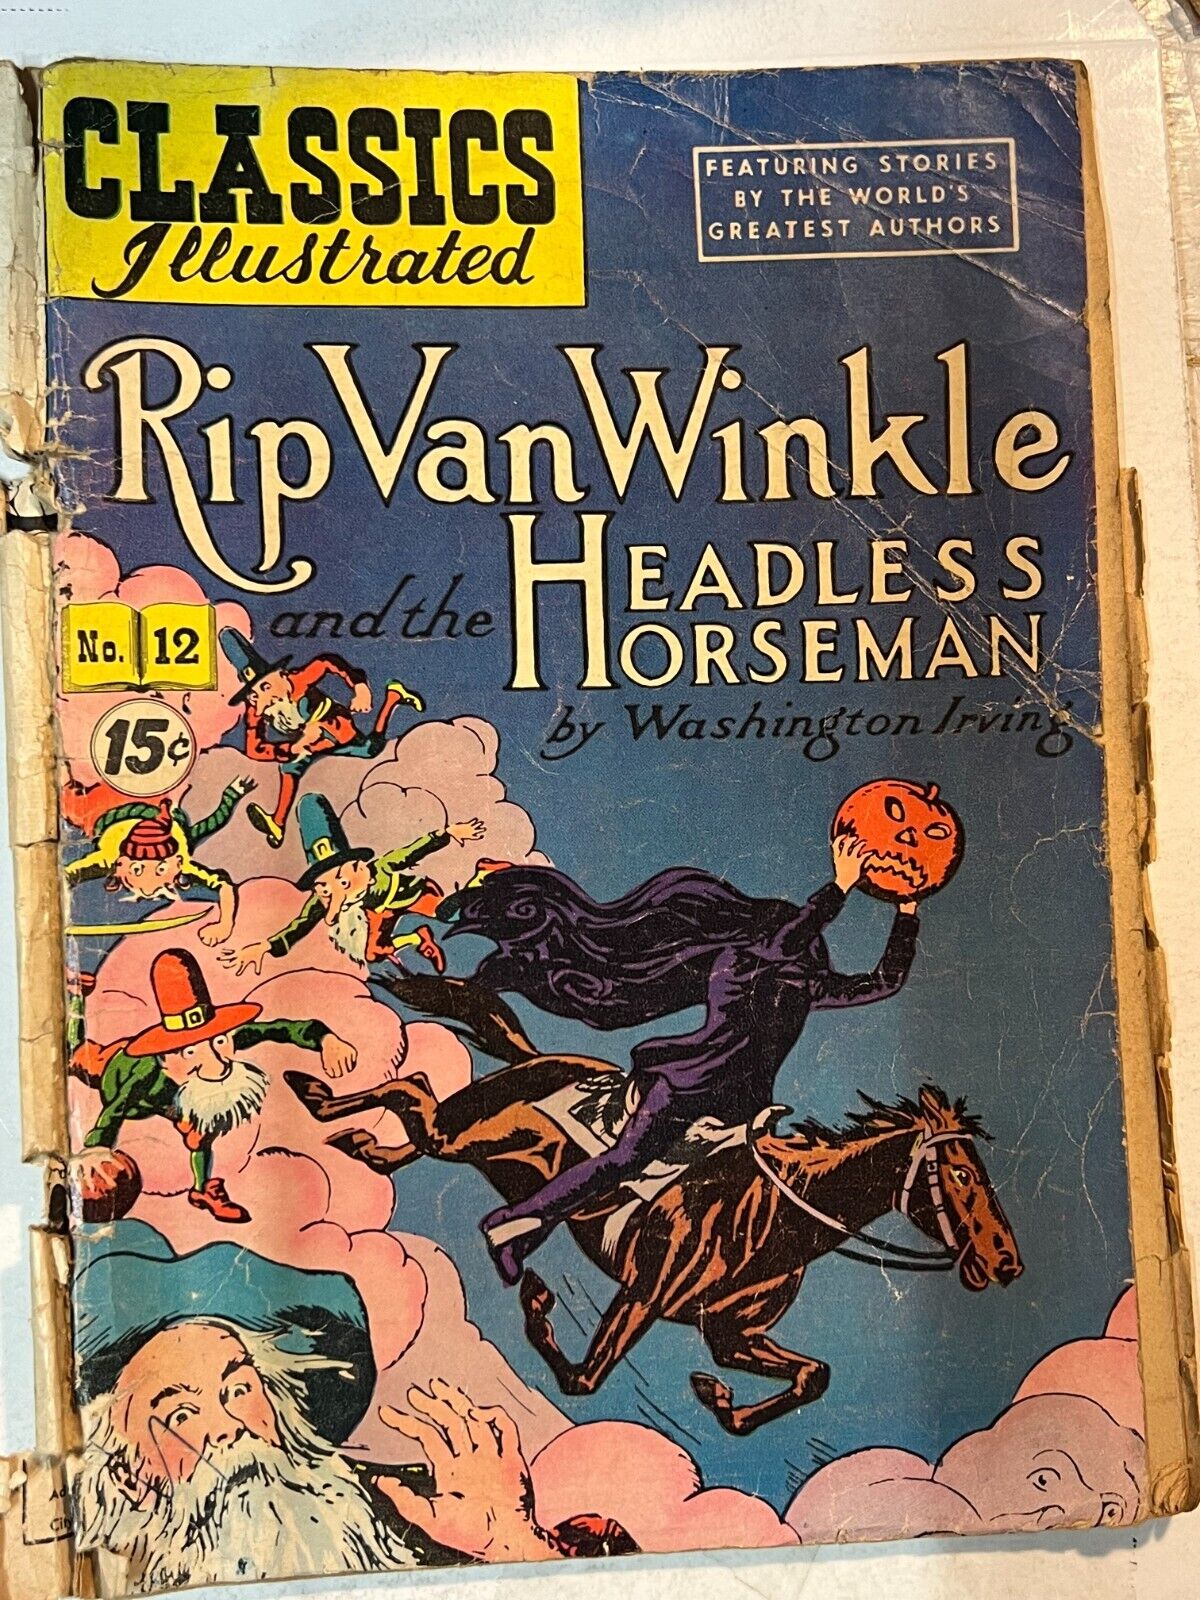 CLASSICS ILLUSTRATED #12 1950 RIP VAN WINKLE AND HEADLESS HORSEMAN